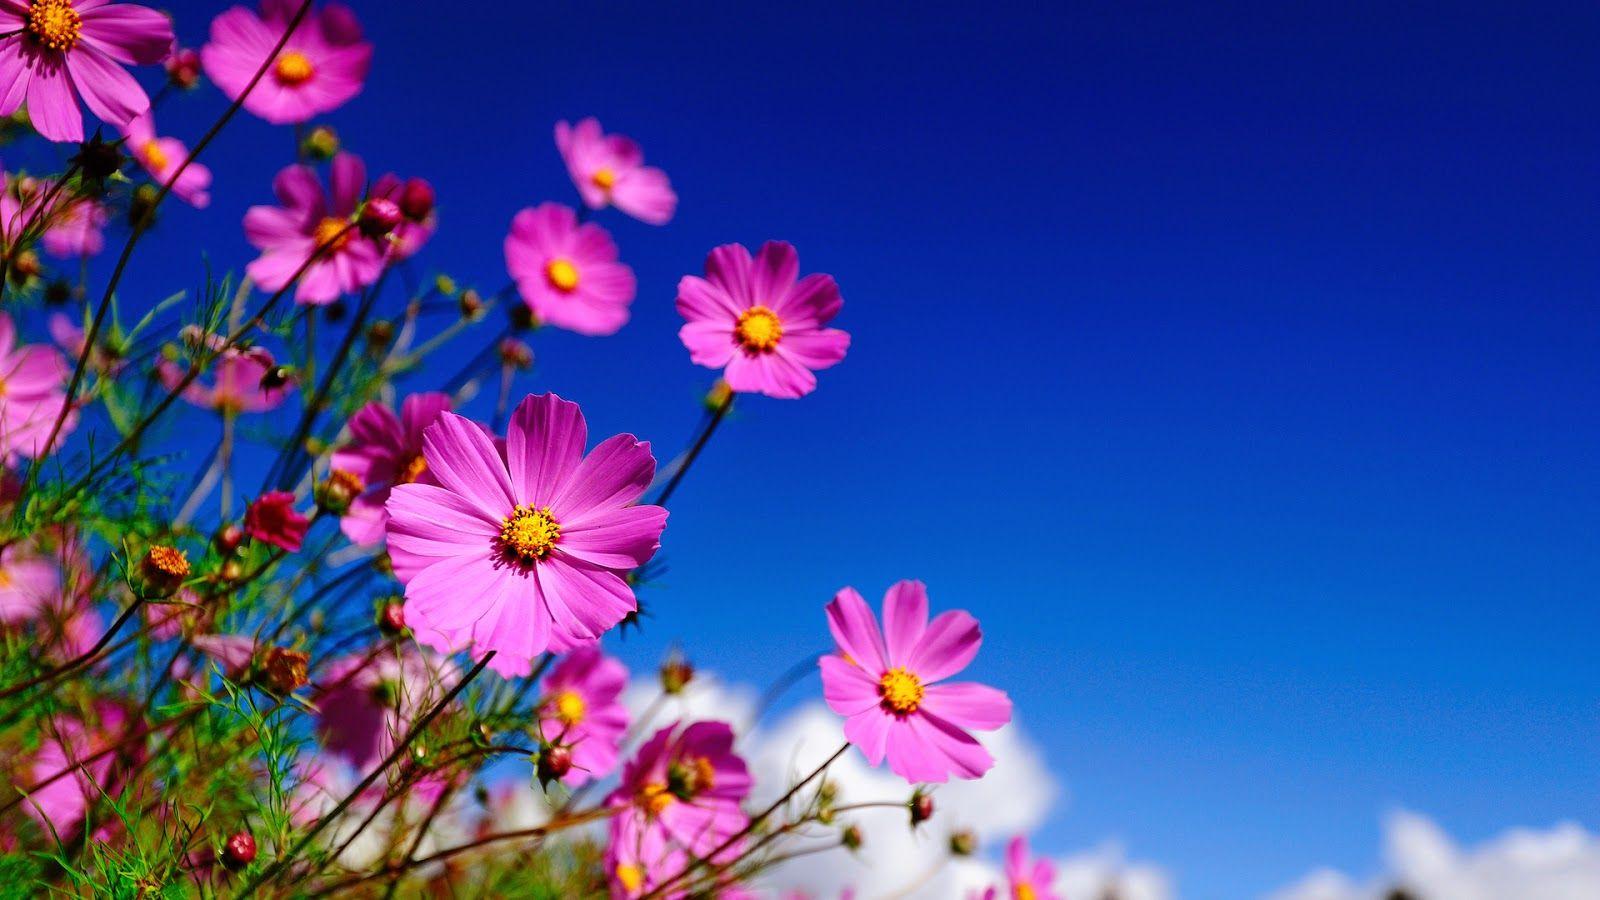 Beautiful Flower iPhone Wallpaper Full HD Image  Download 